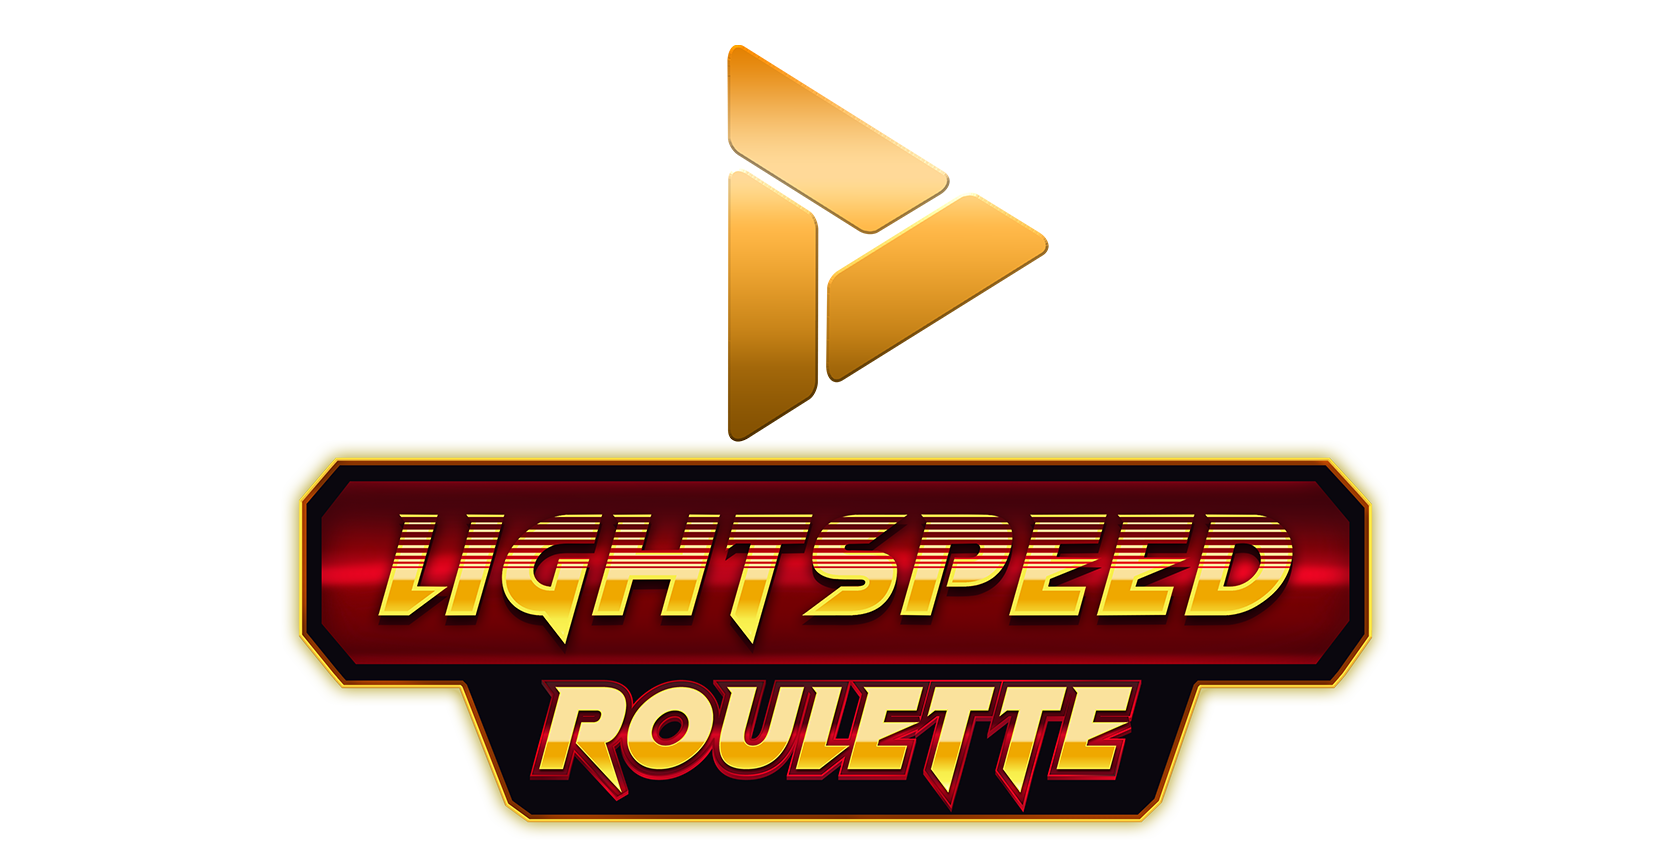 Lightspeed Roulette